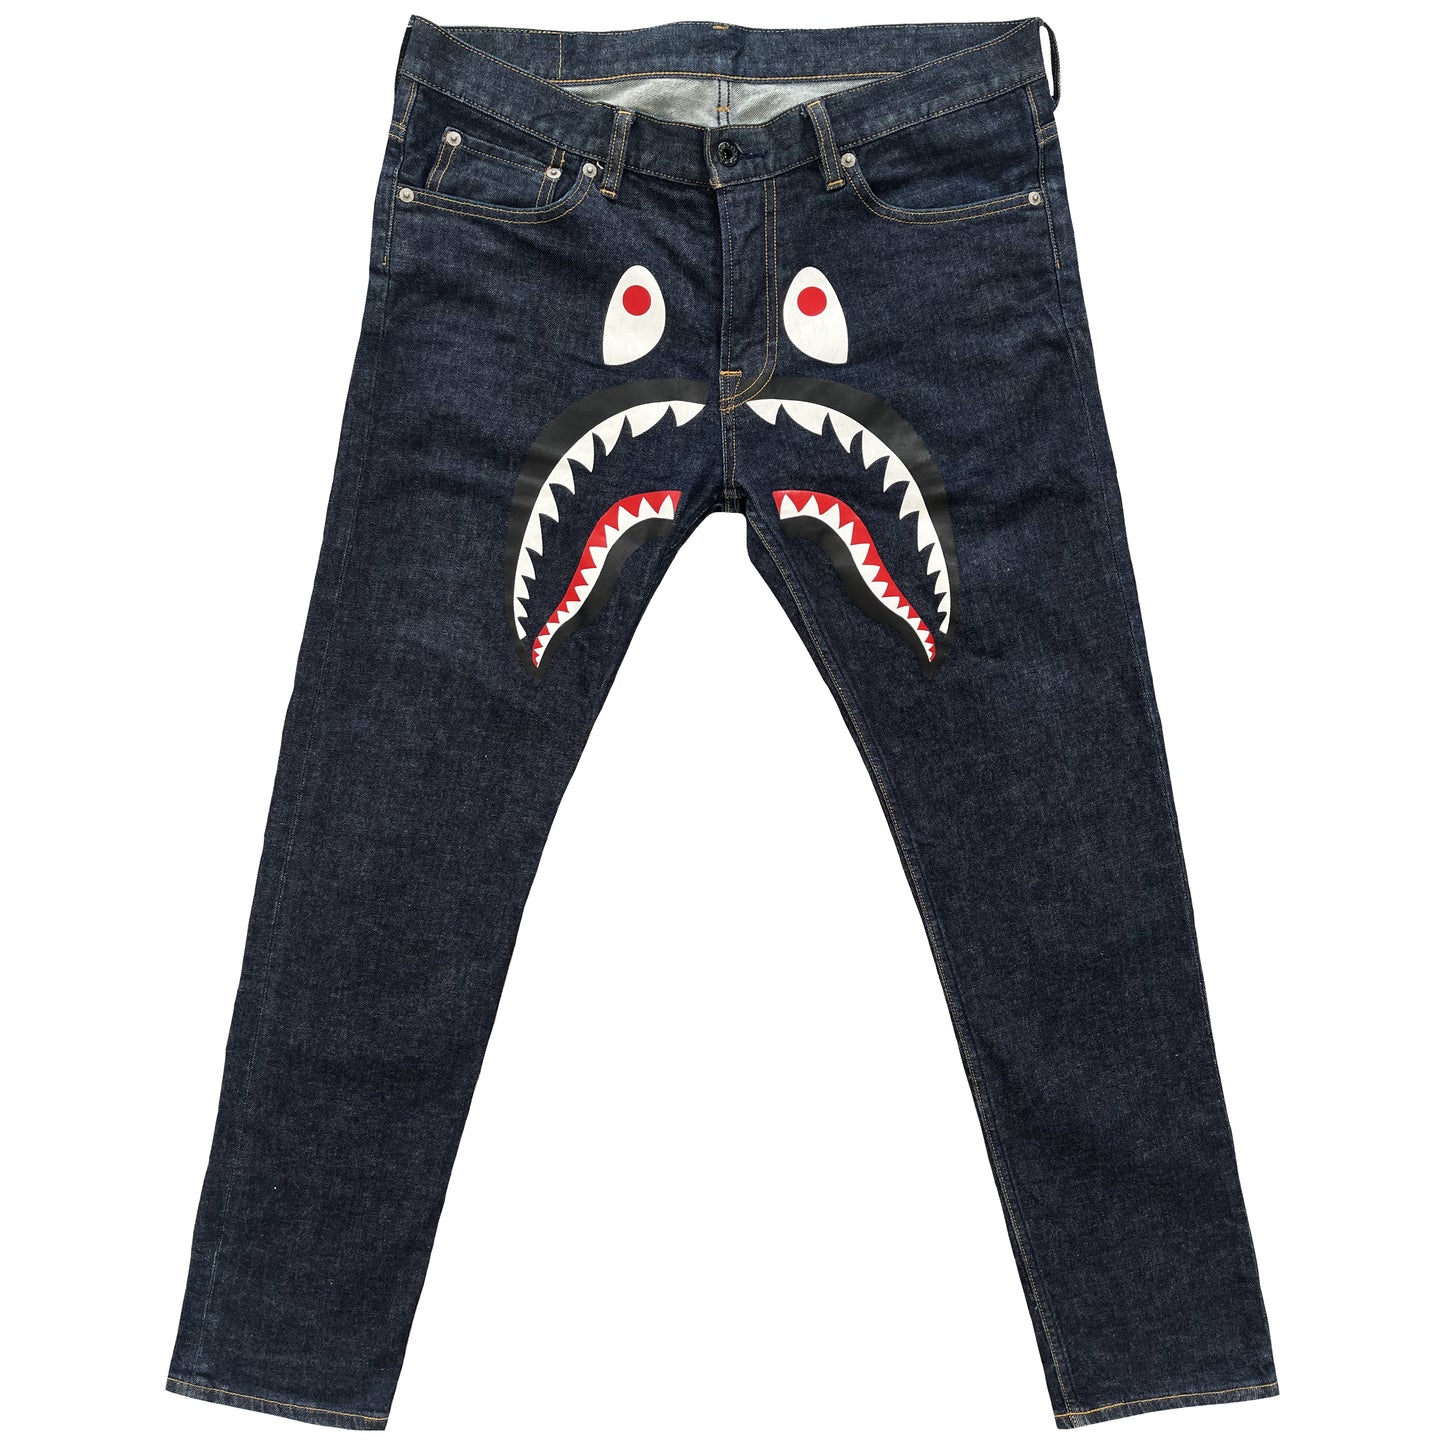 Bape Shark Jeans